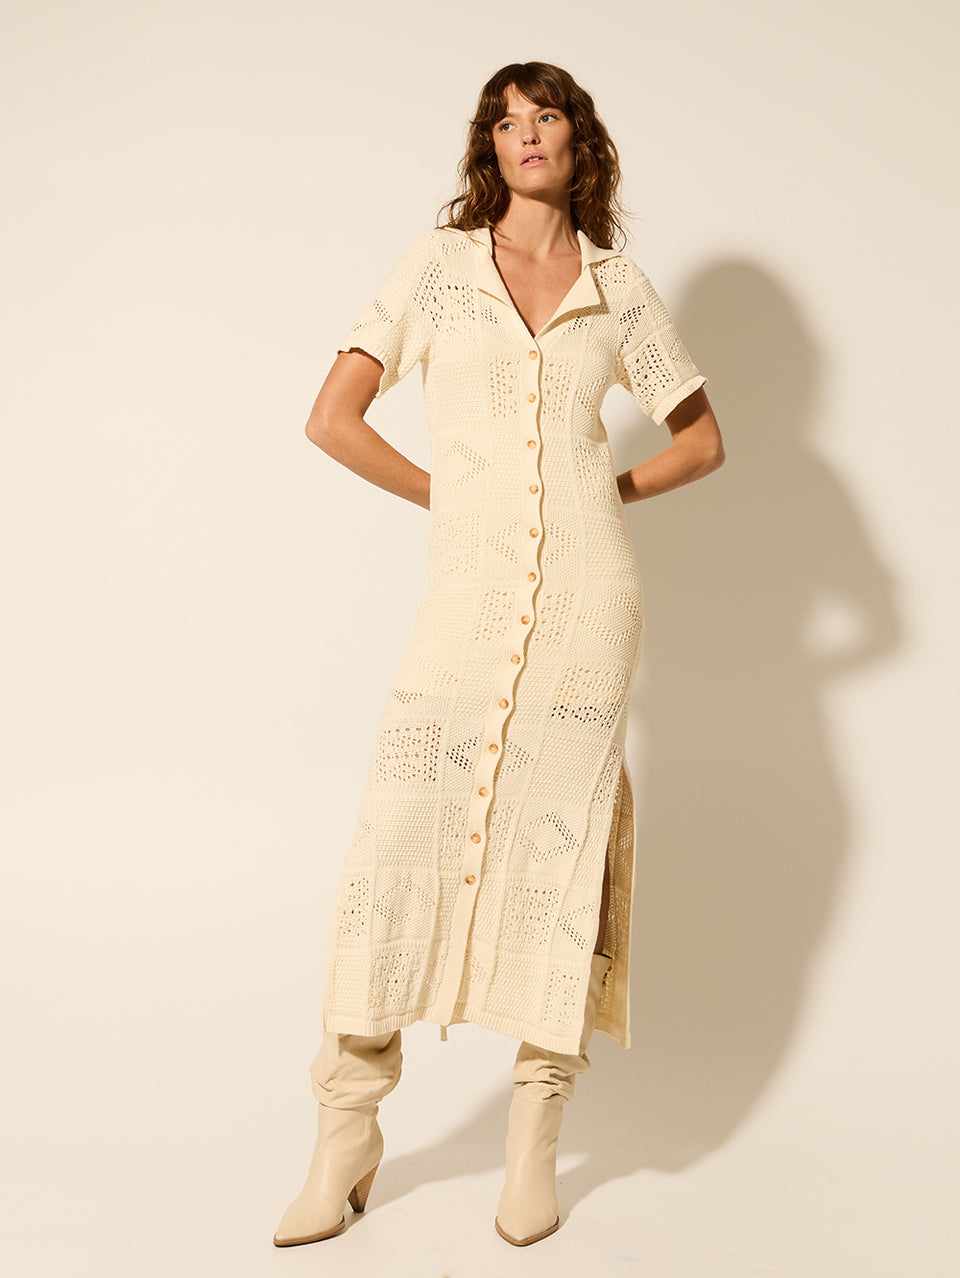 Clementine Collared Midi Dress Cream KIVARI | Model wears cream knit midi dress